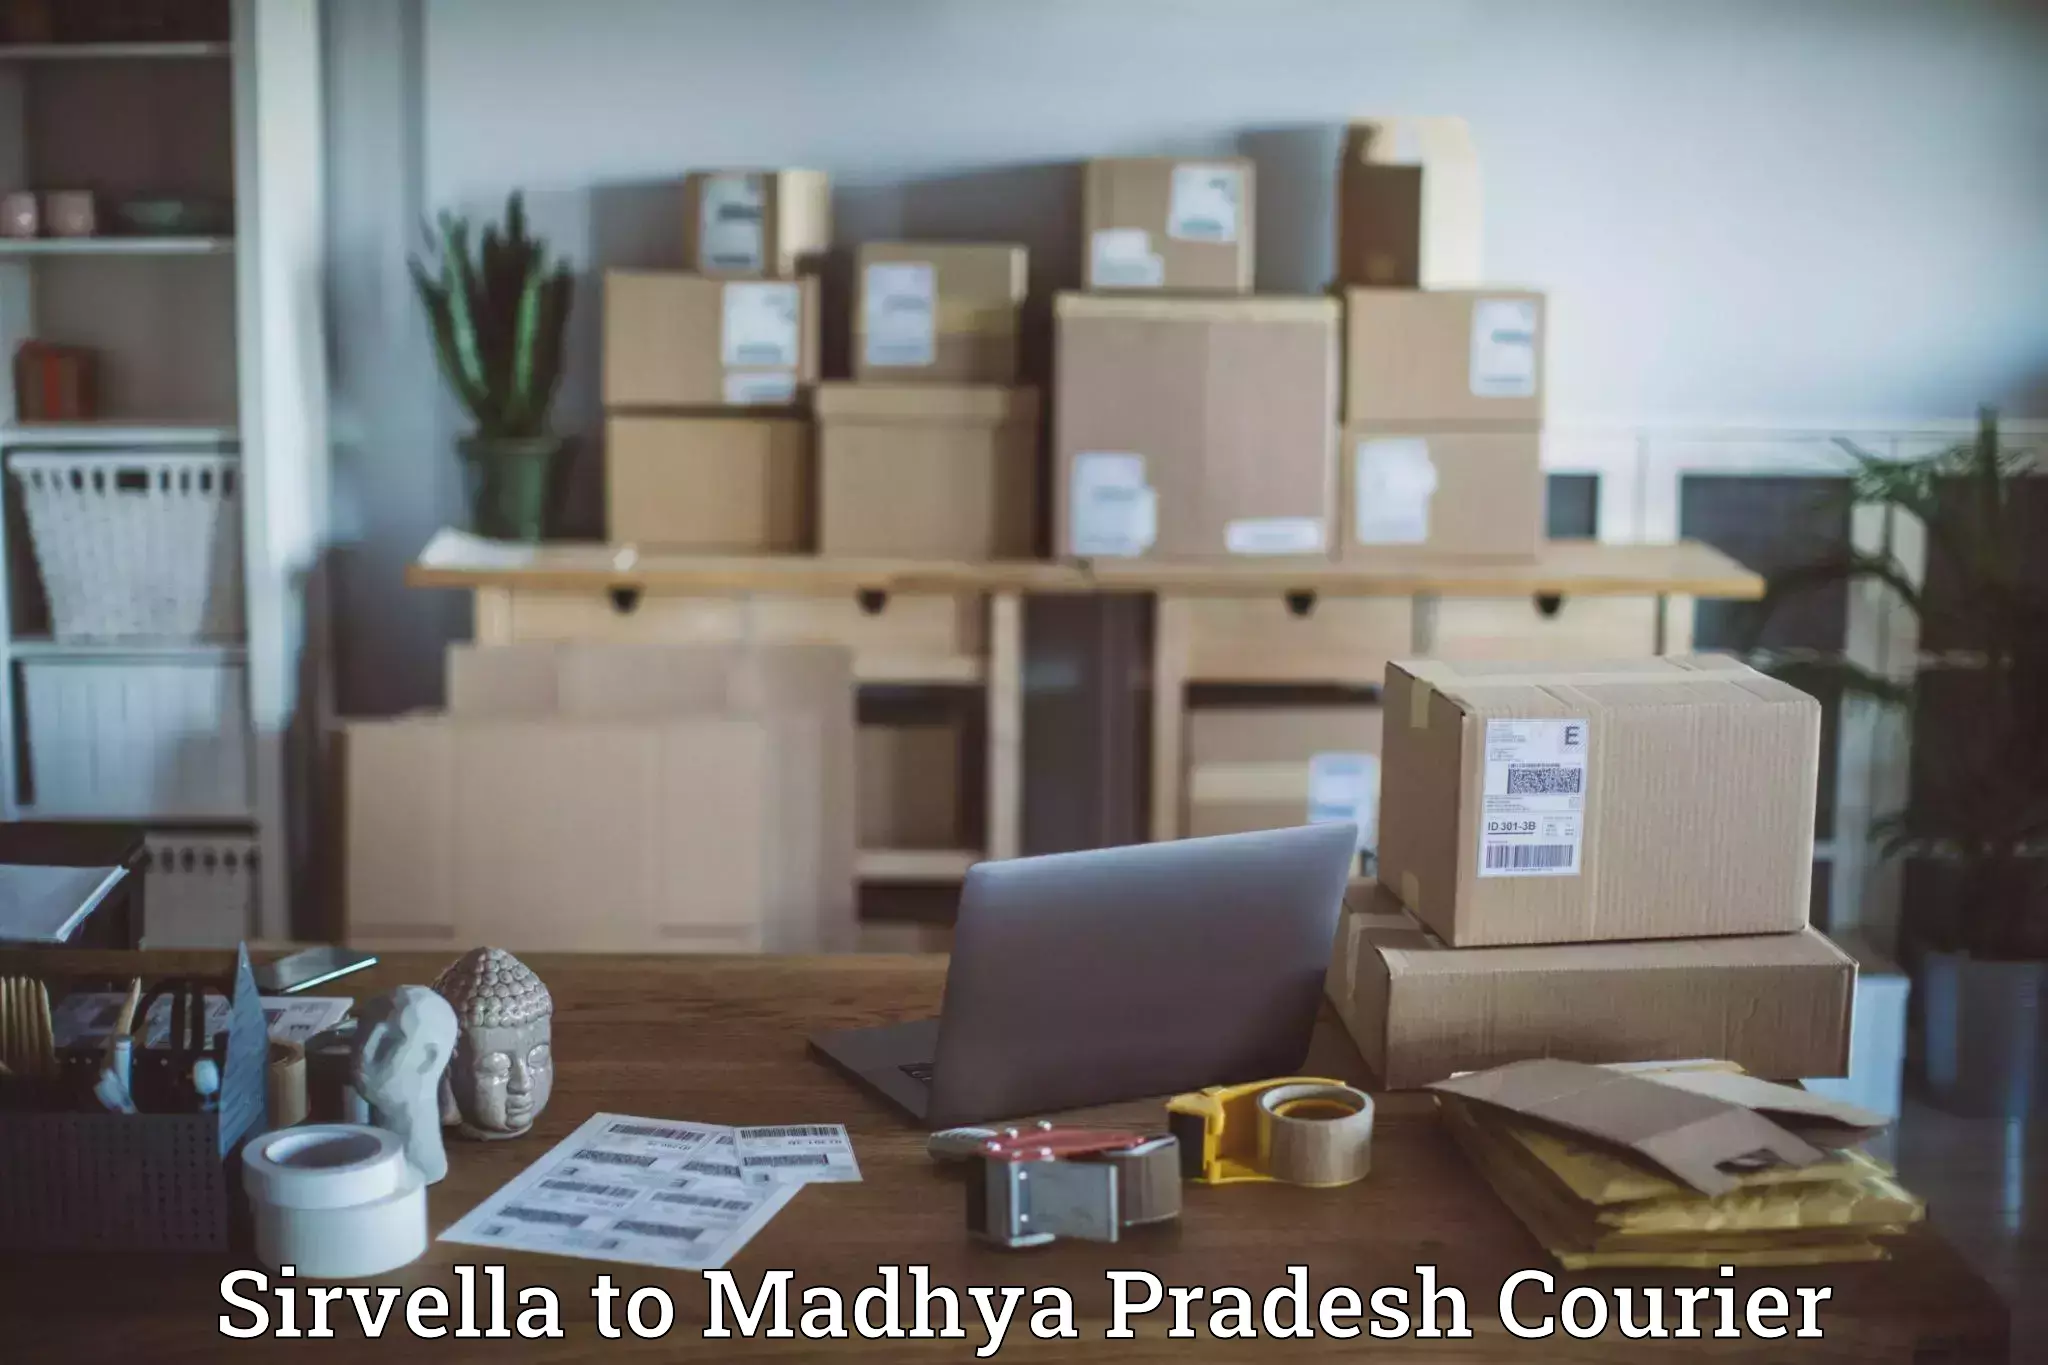 Courier service comparison Sirvella to Nagda